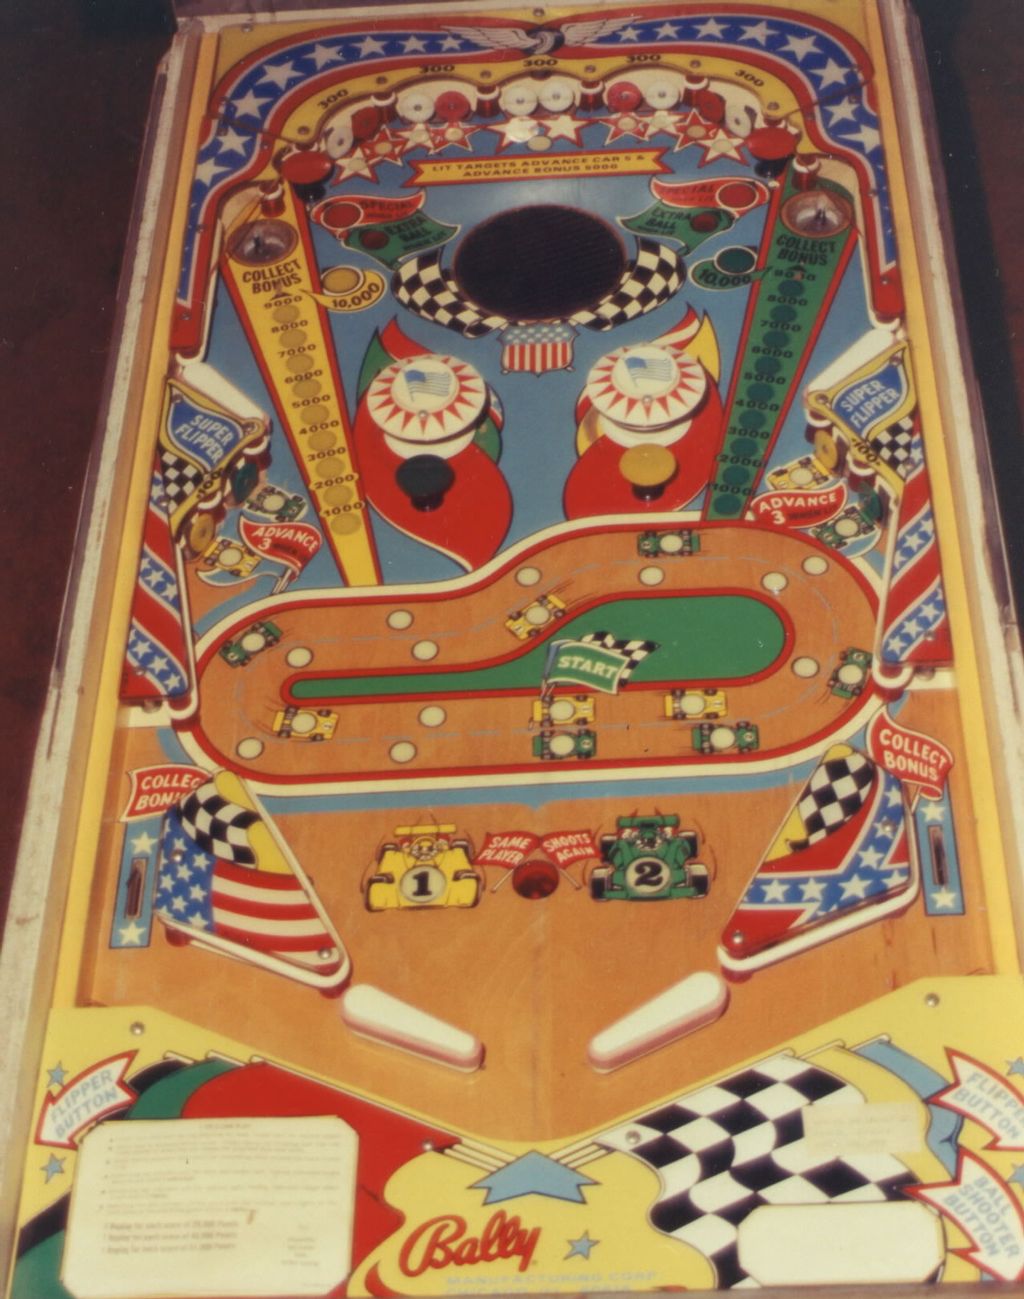 1974 bally twin win pinball machine